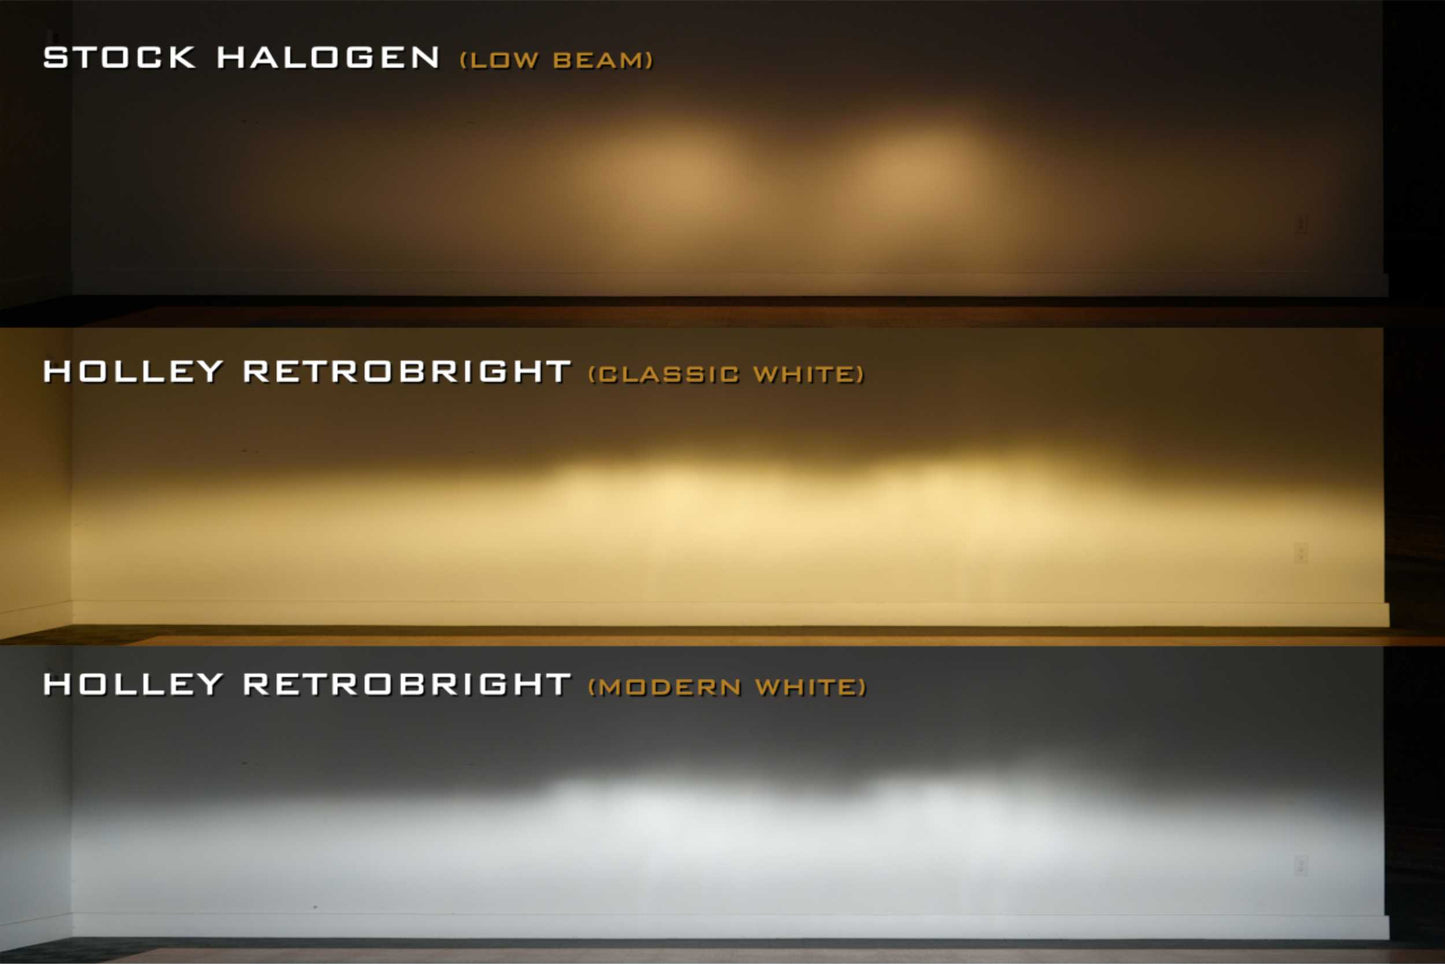 Holley RetroBright Headlight: Modern White (5x7" Rectangle)